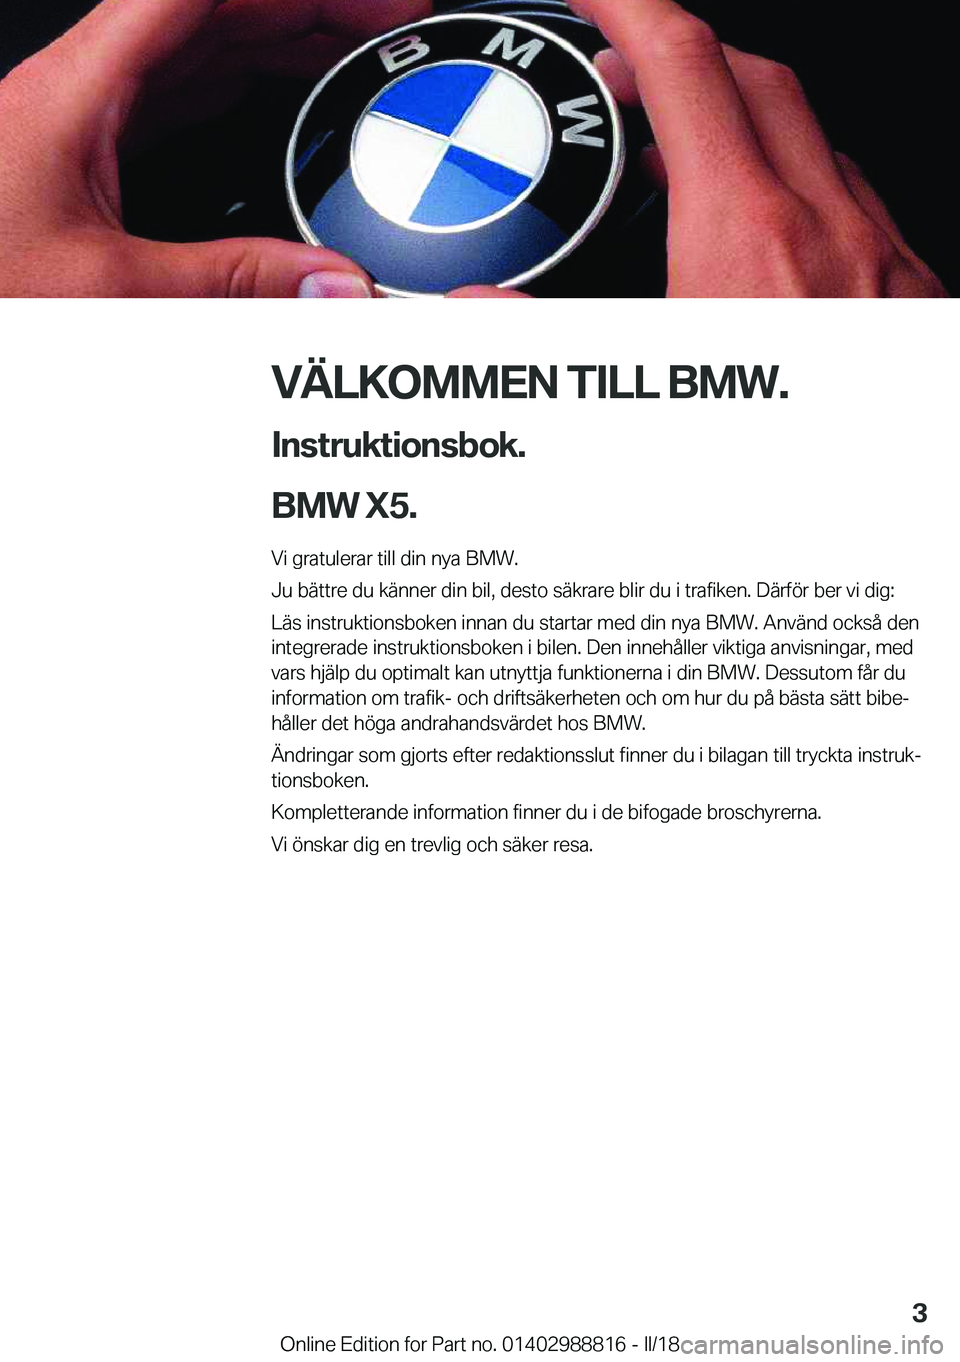 BMW X5 2018  InstruktionsbÖcker (in Swedish) �V�Ä�L�K�O�M�M�E�N��T�I�L�L��B�M�W�.�I�n�s�t�r�u�k�t�i�o�n�s�b�o�k�.
�B�M�W��X�5�.
�V�i� �g�r�a�t�u�l�e�r�a�r� �t�i�l�l� �d�i�n� �n�y�a� �B�M�W�.
�J�u� �b�ä�t�t�r�e� �d�u� �k�ä�n�n�e�r� �d�i�n� 